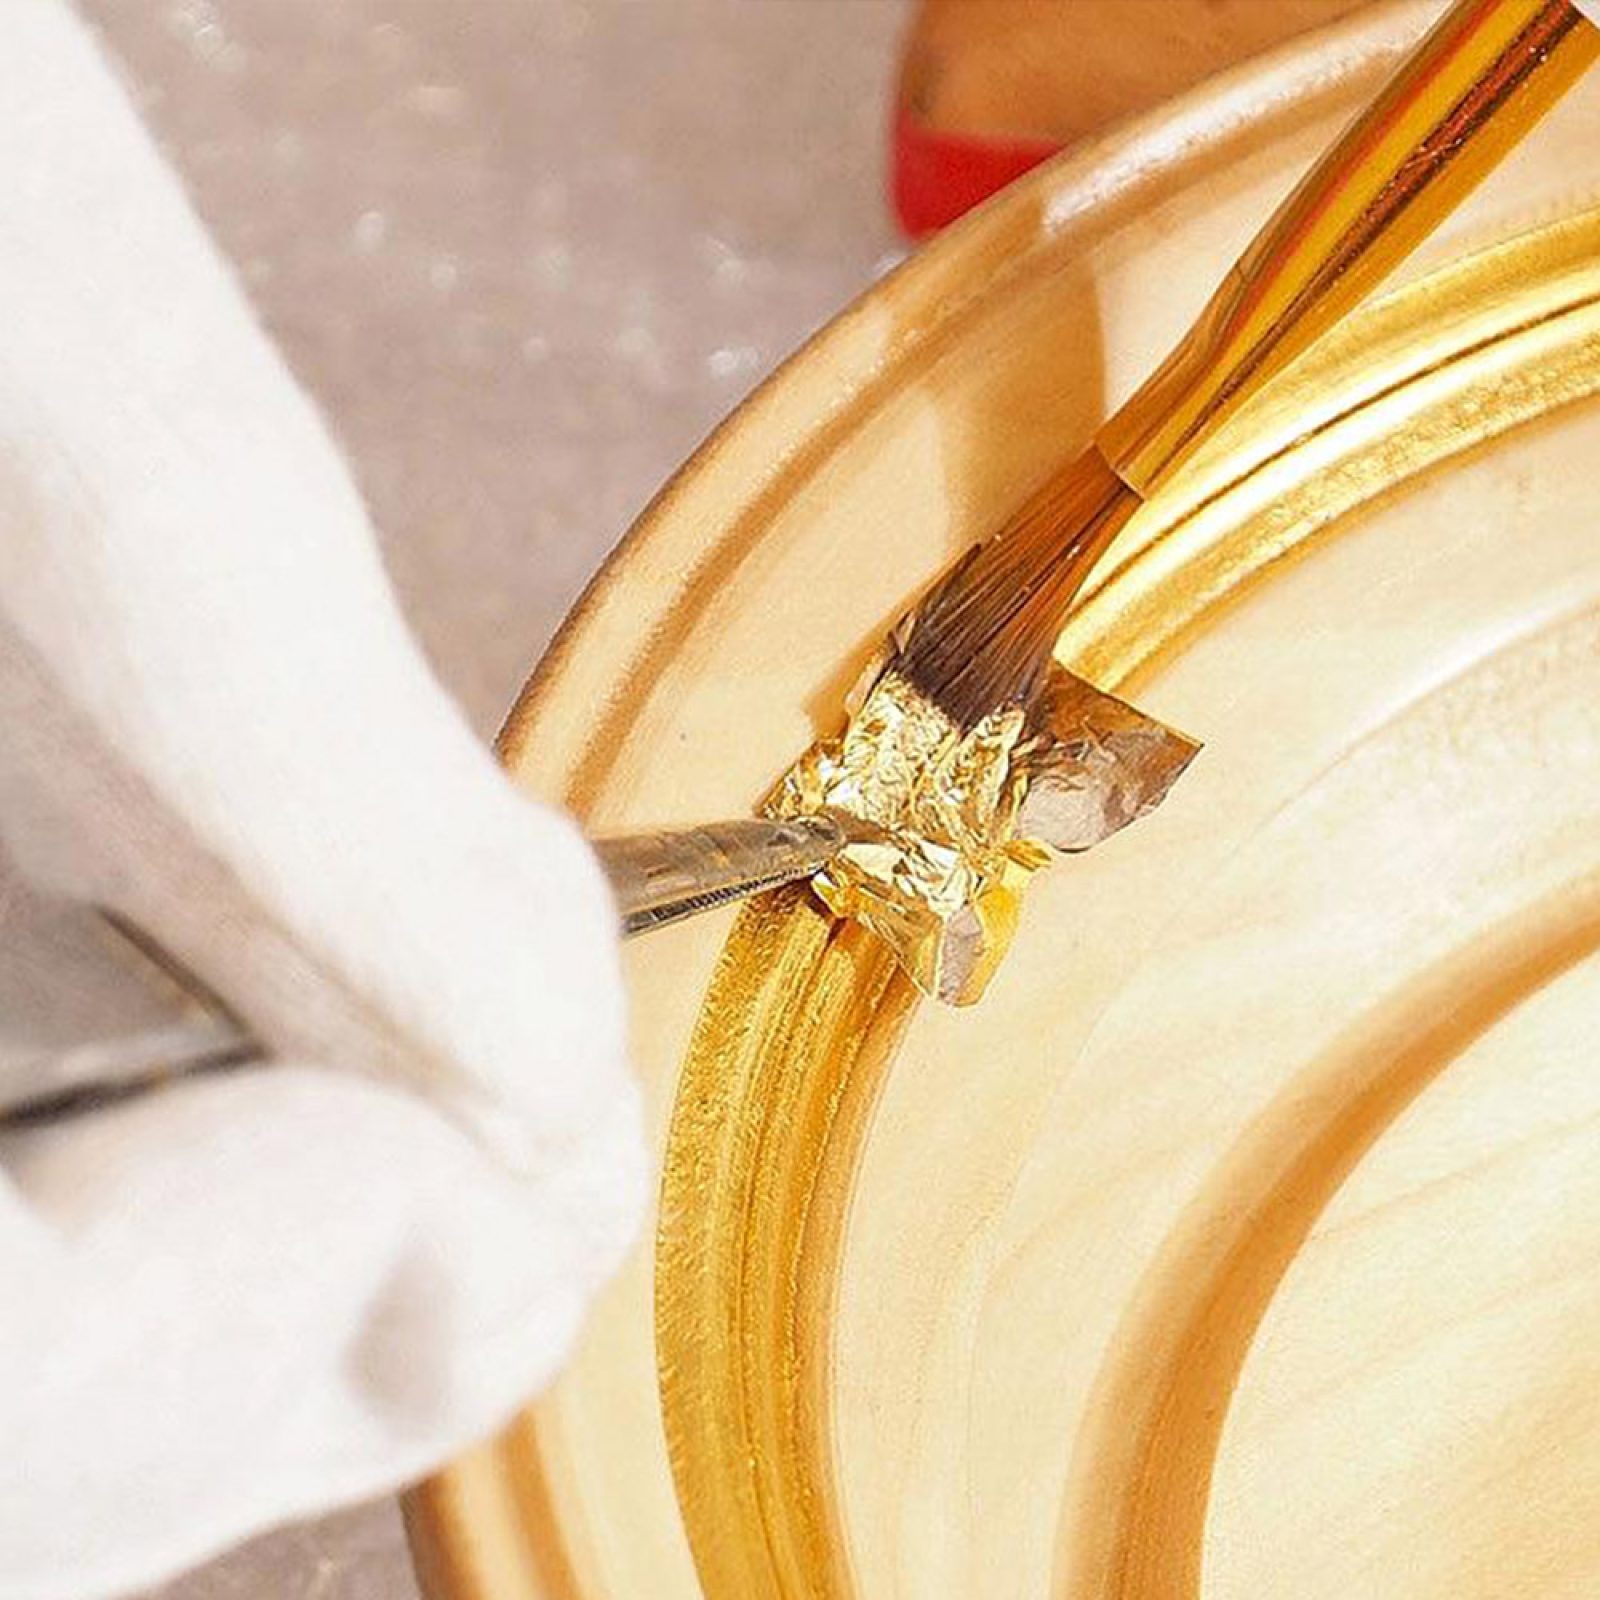 AMBRINE - Gilded with 24-carat gold | Natalis Luxus